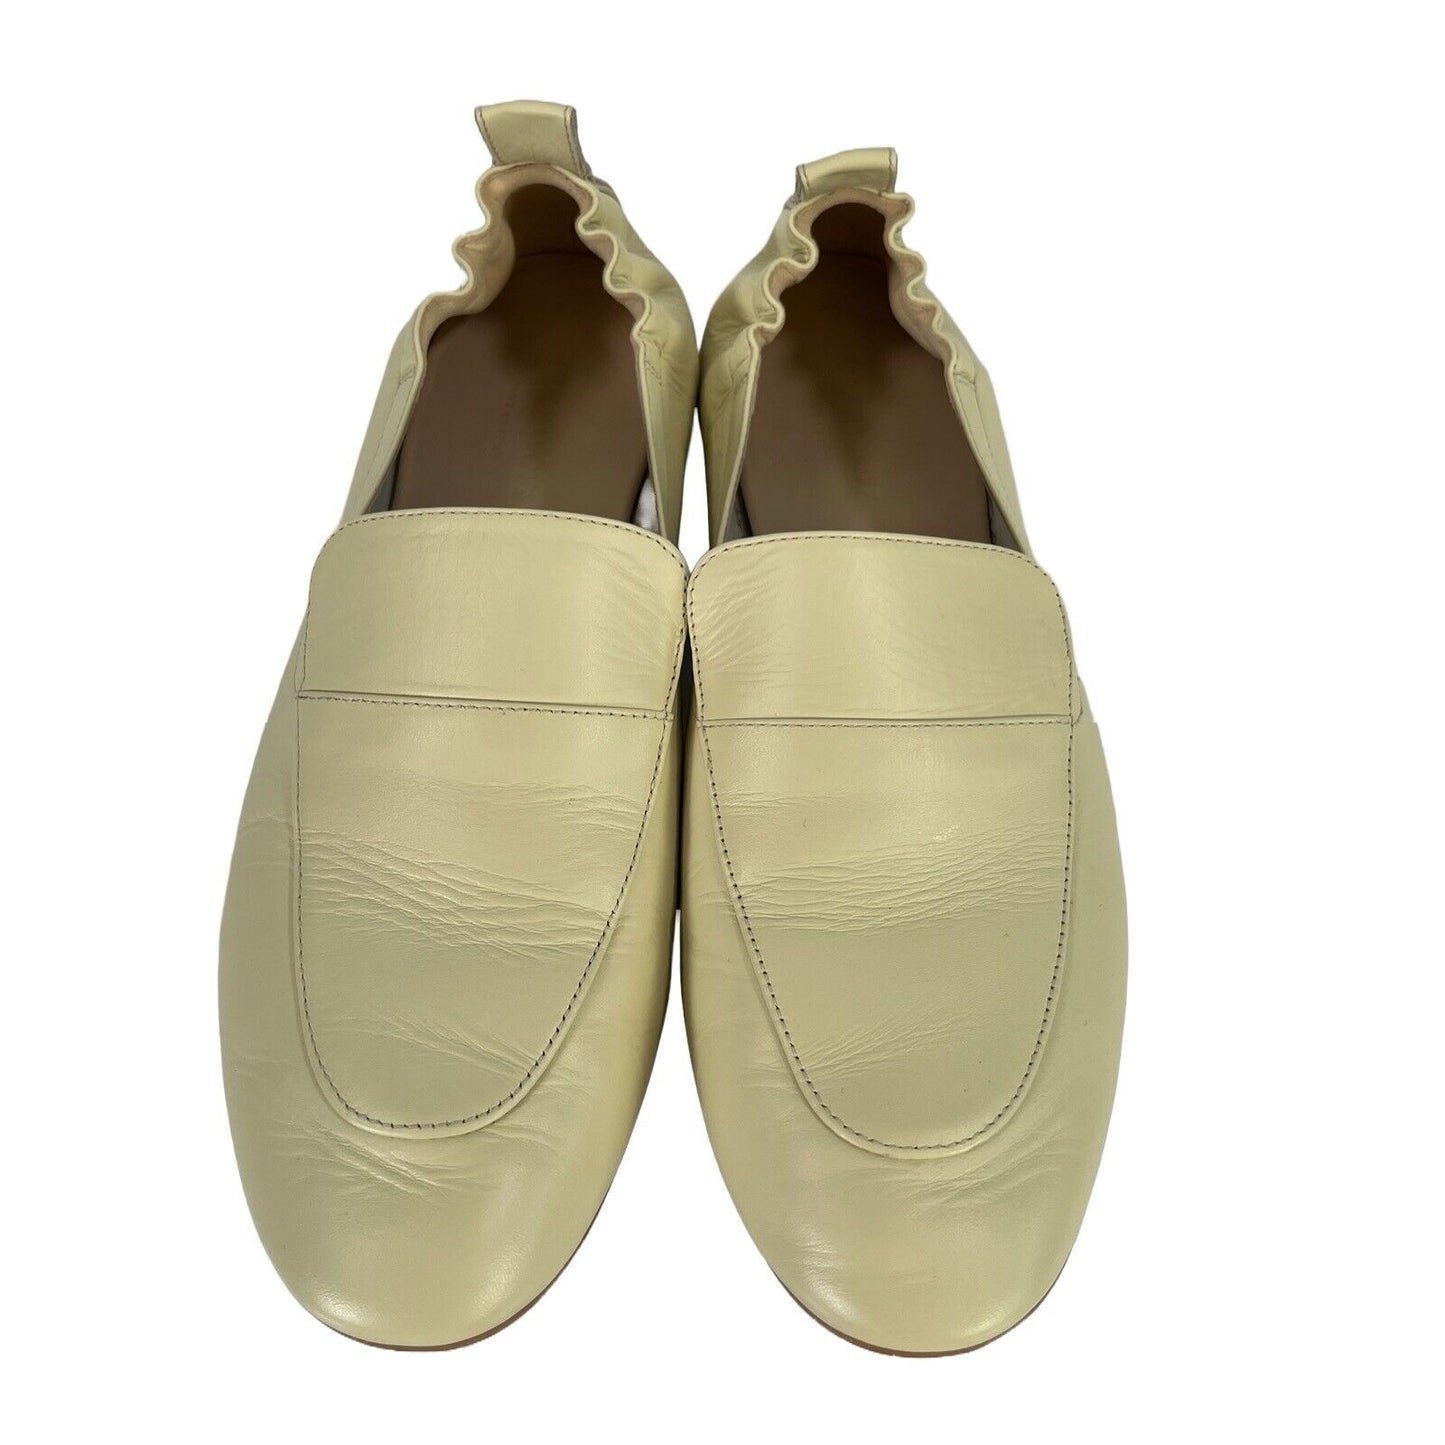 NEW Everlane Women's Pale Yellow Leather Italian Ballet Flats - 9.5